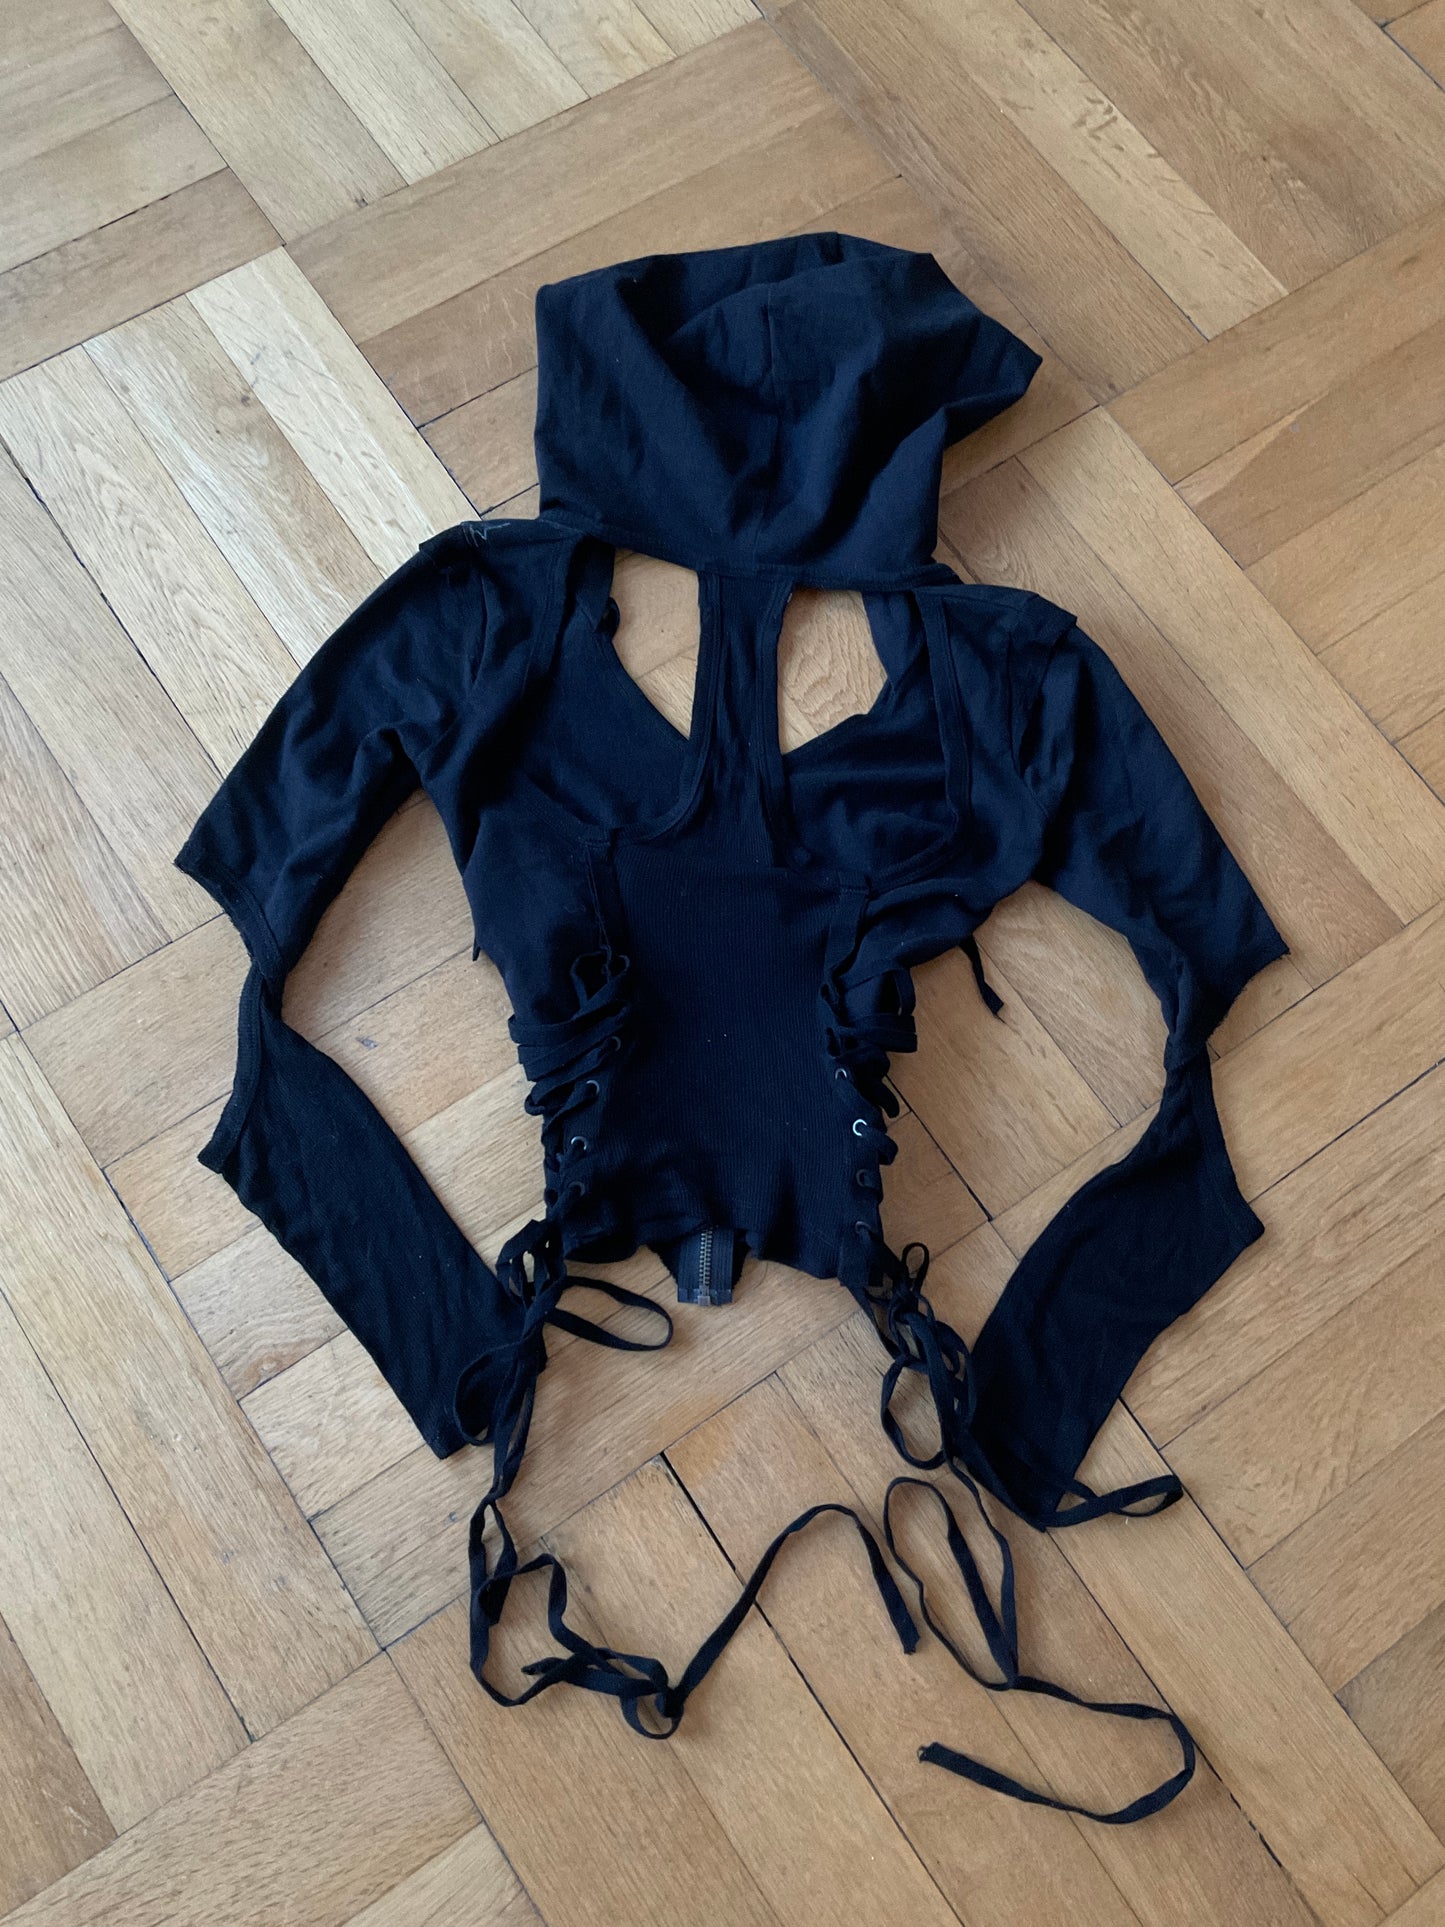 Goth corset hoodie